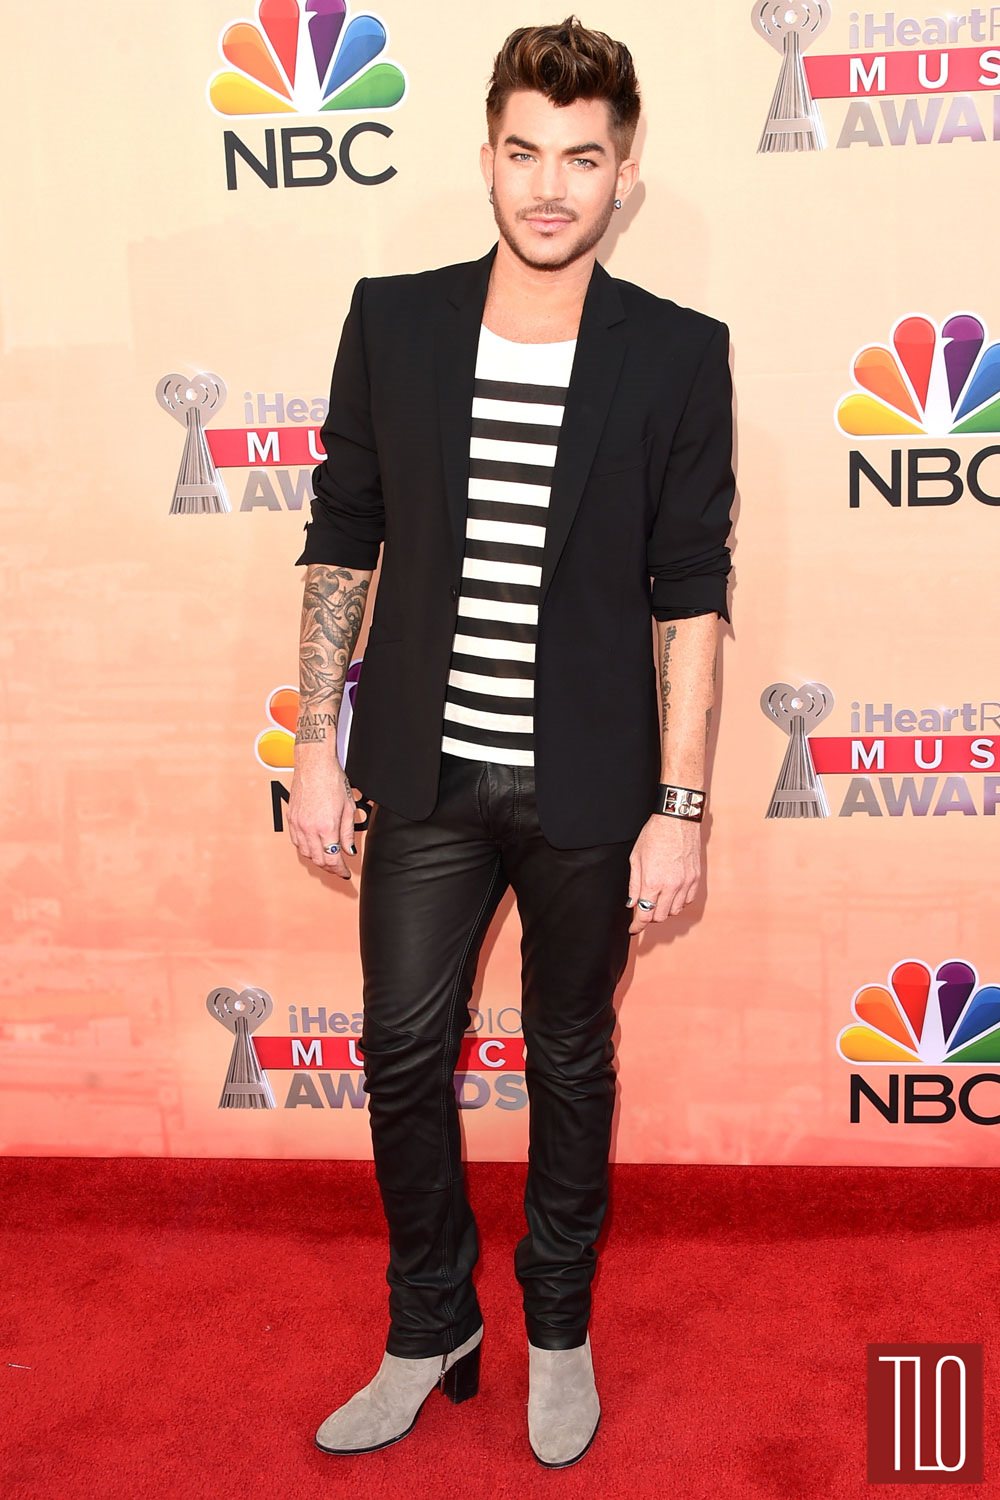 http://tomandlorenzo.com/wp-content/uploads/2015/03/Adam-Lambert-2015-iHeartRadio-Music-Awards-Red-Carpet-Fashion-Tom-Lorenzo-Site-TLO-1.jpg